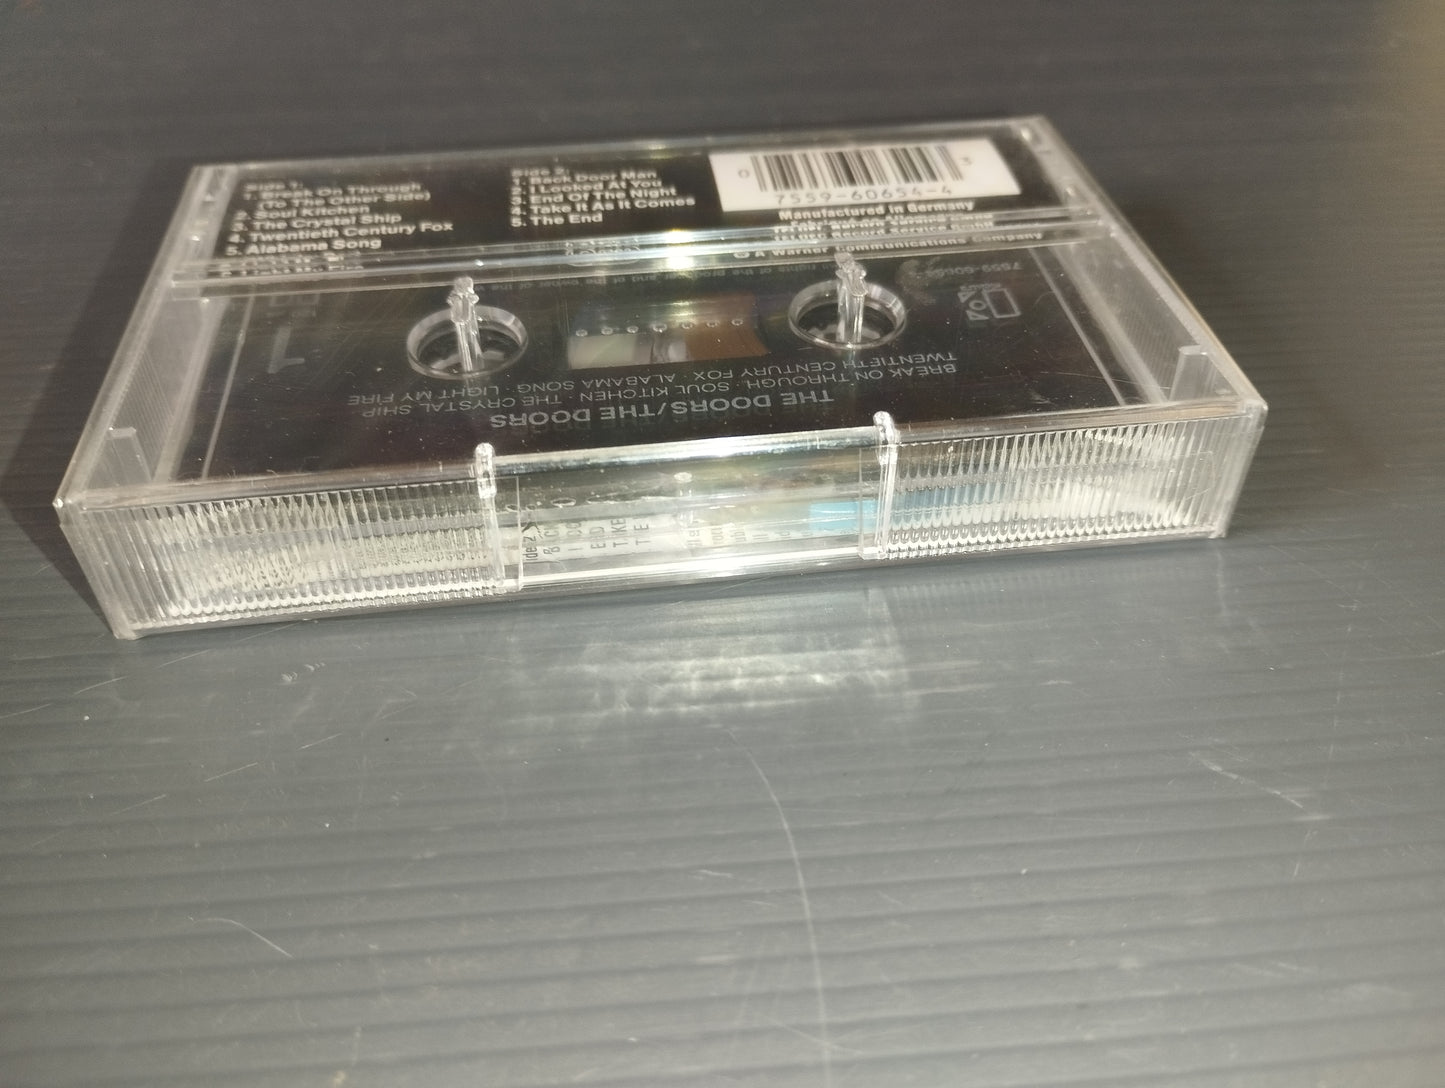 The Doors" Cassette